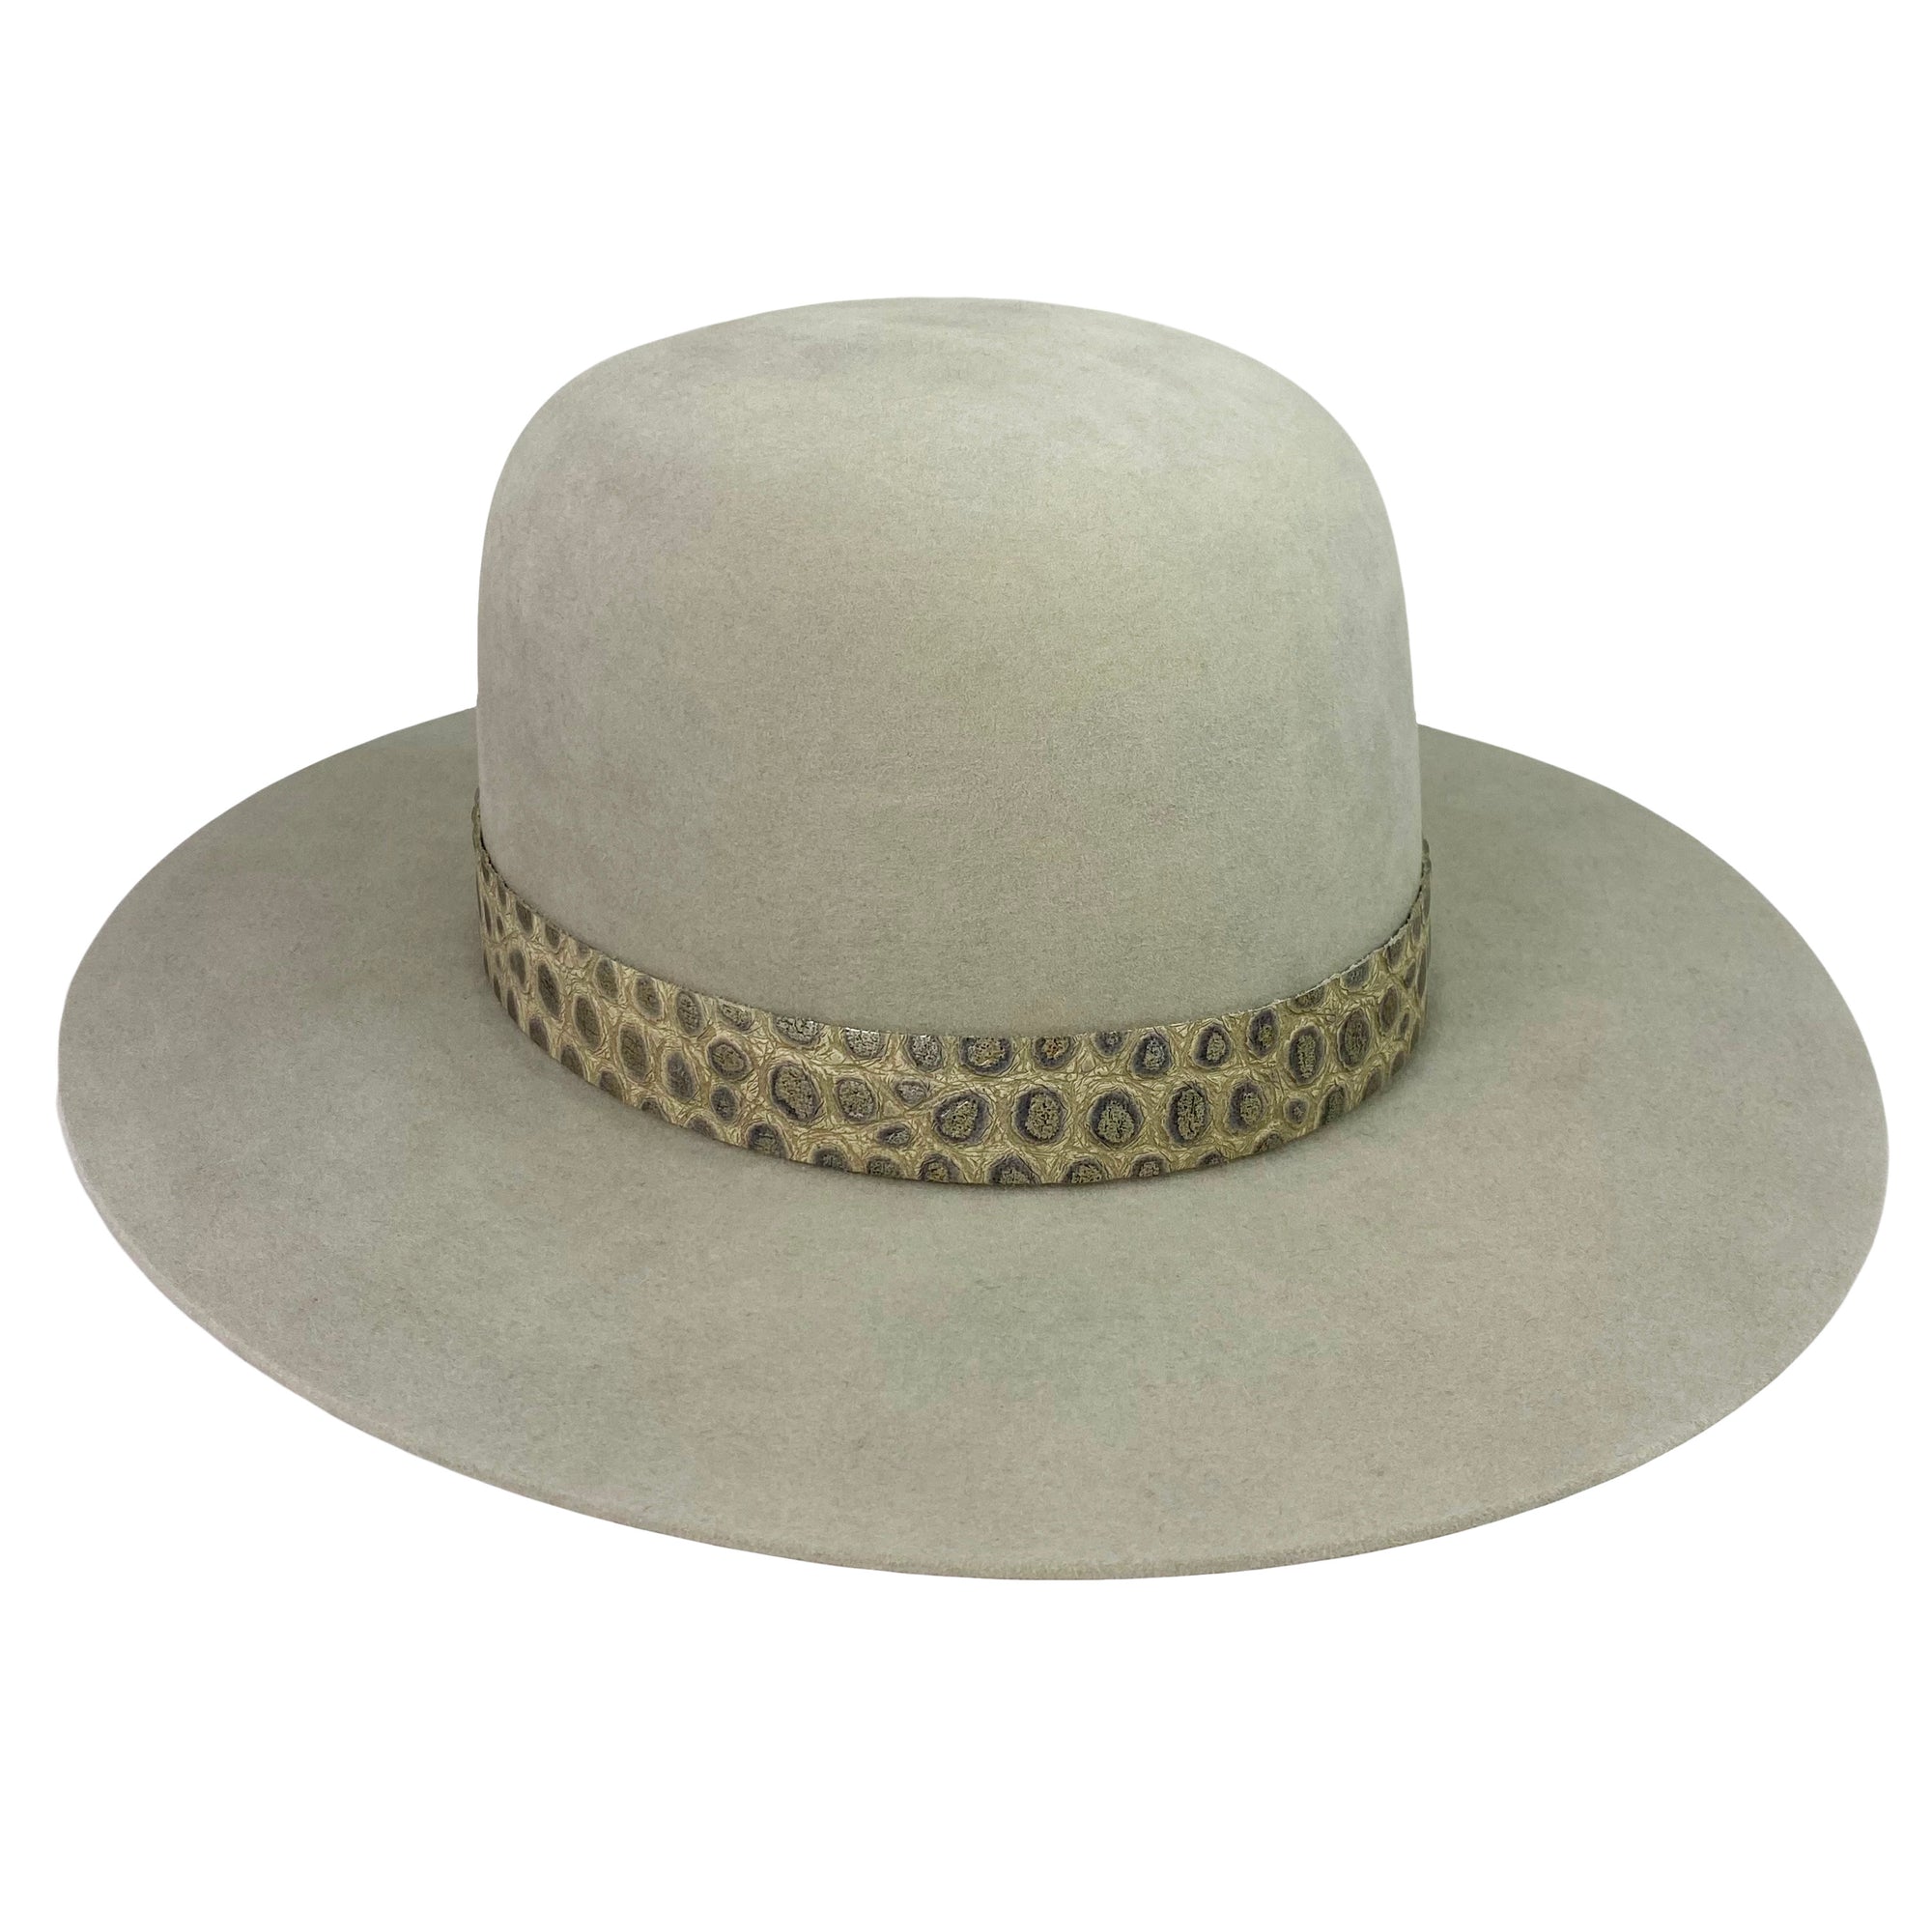 "tin foil hat #2" 7 3/4